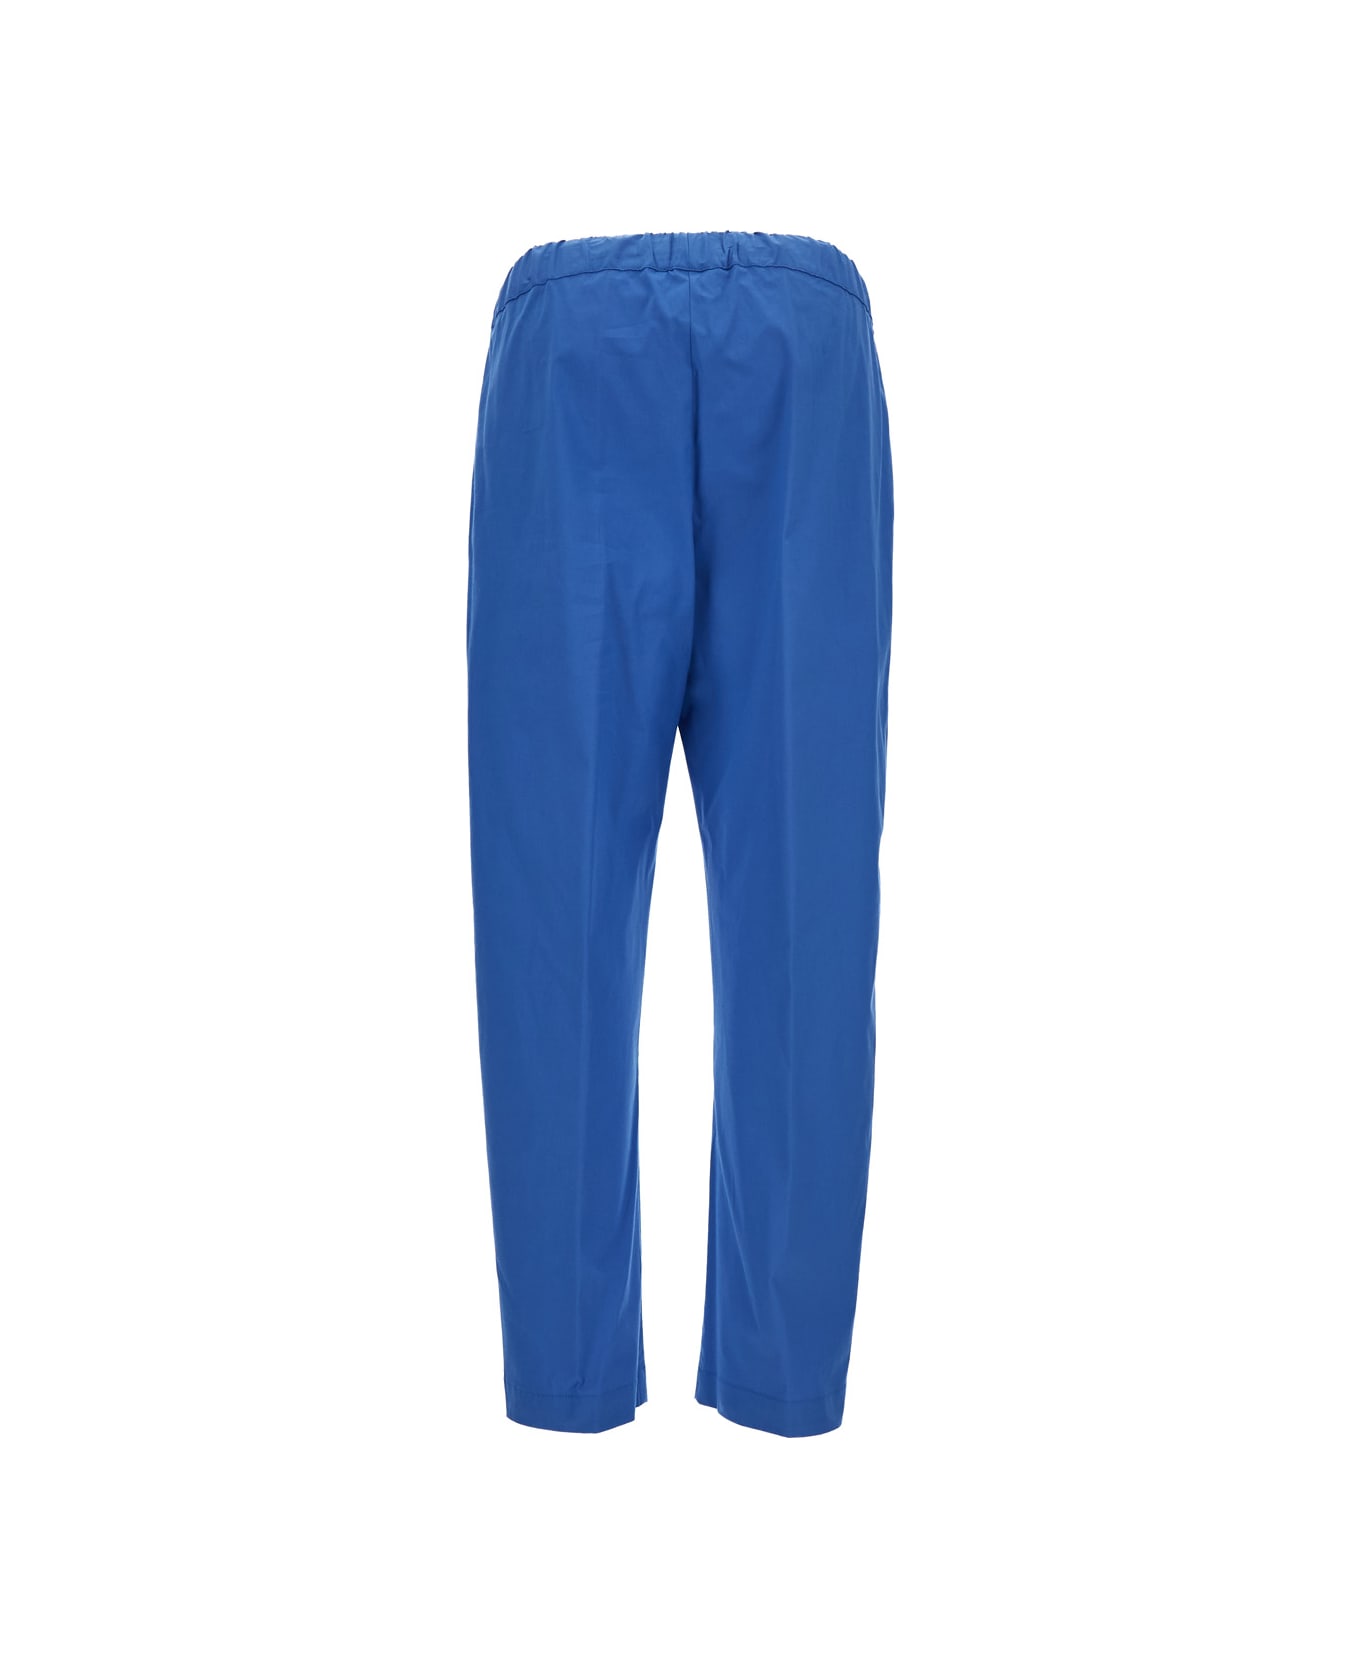 SEMICOUTURE Blue Crop Cut Pants In Cotton Blend Woman - Blu ボトムス